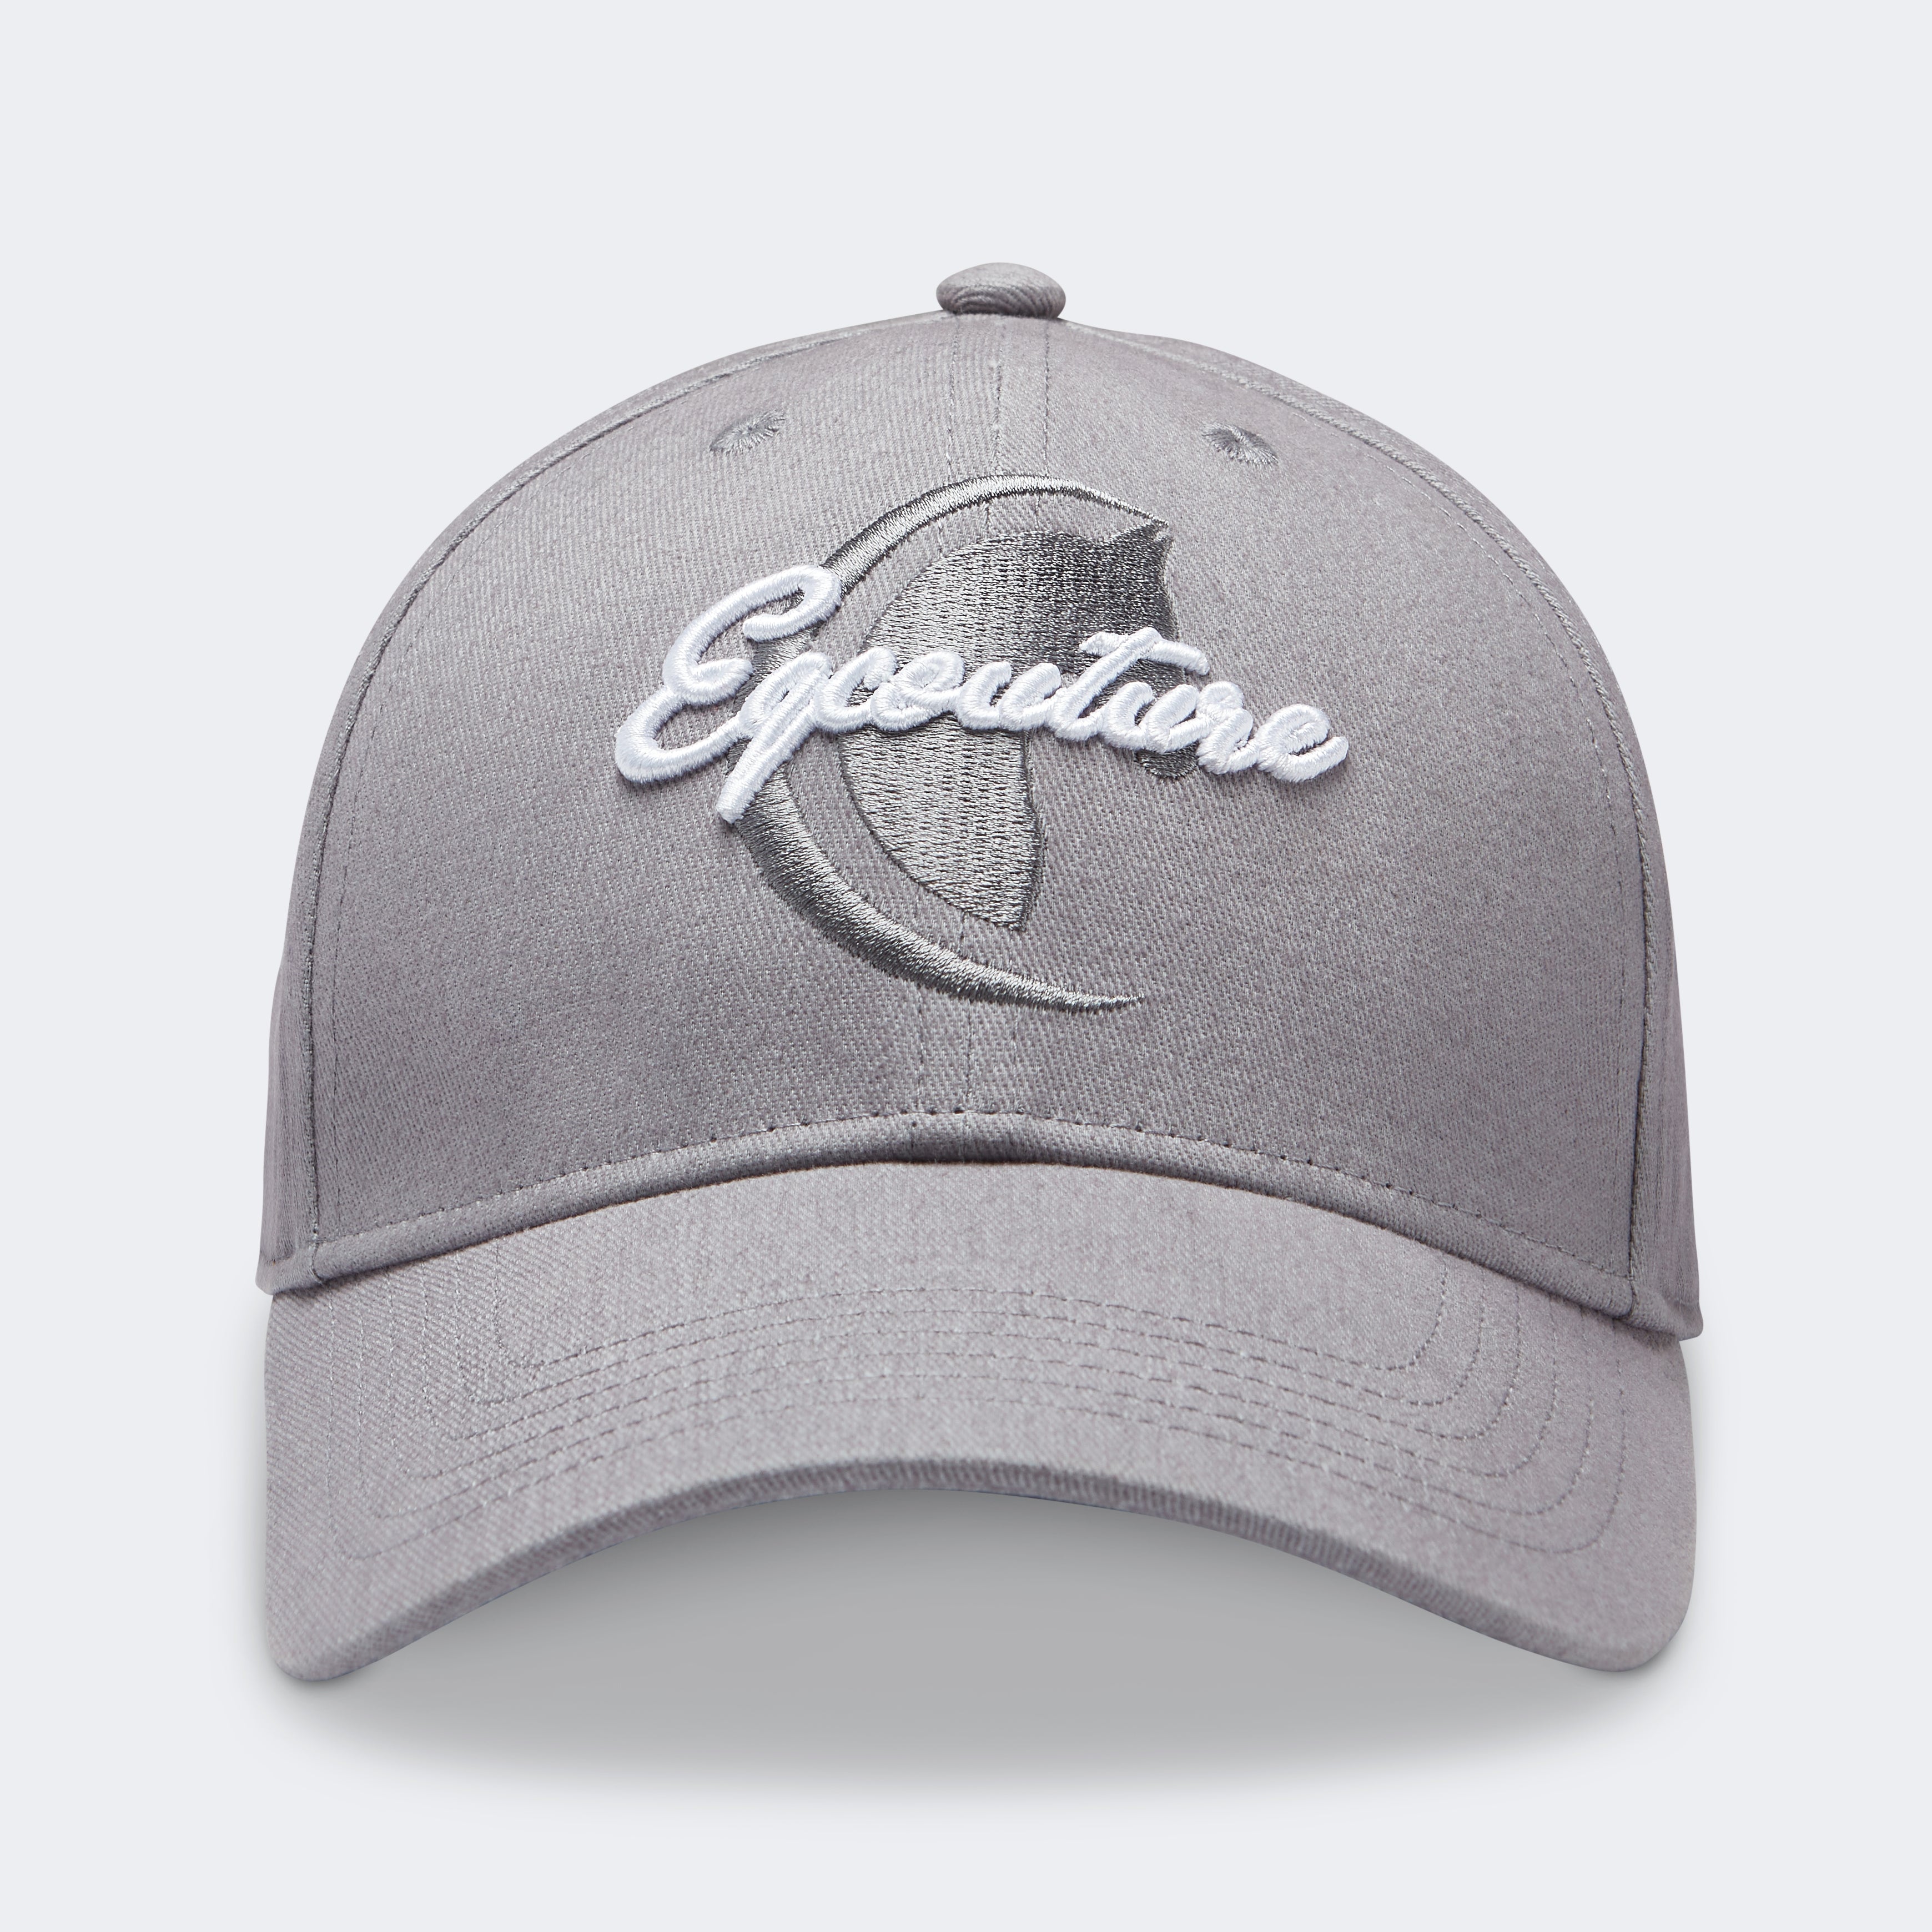 Exclusive Cap / Hat 'Esporte' - Grey